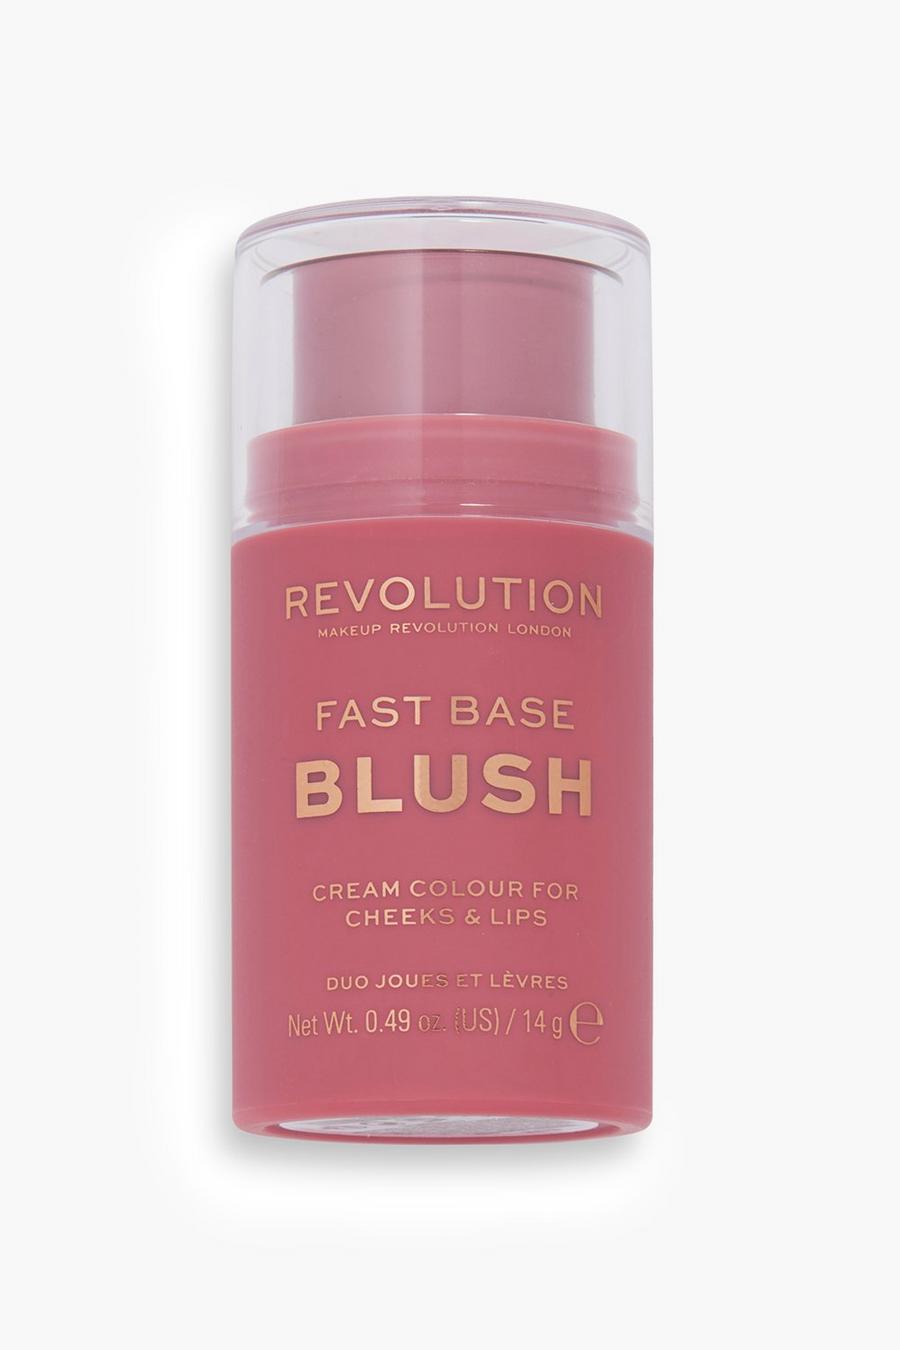 Revolution - Blush en stick - Fast Base, Bare